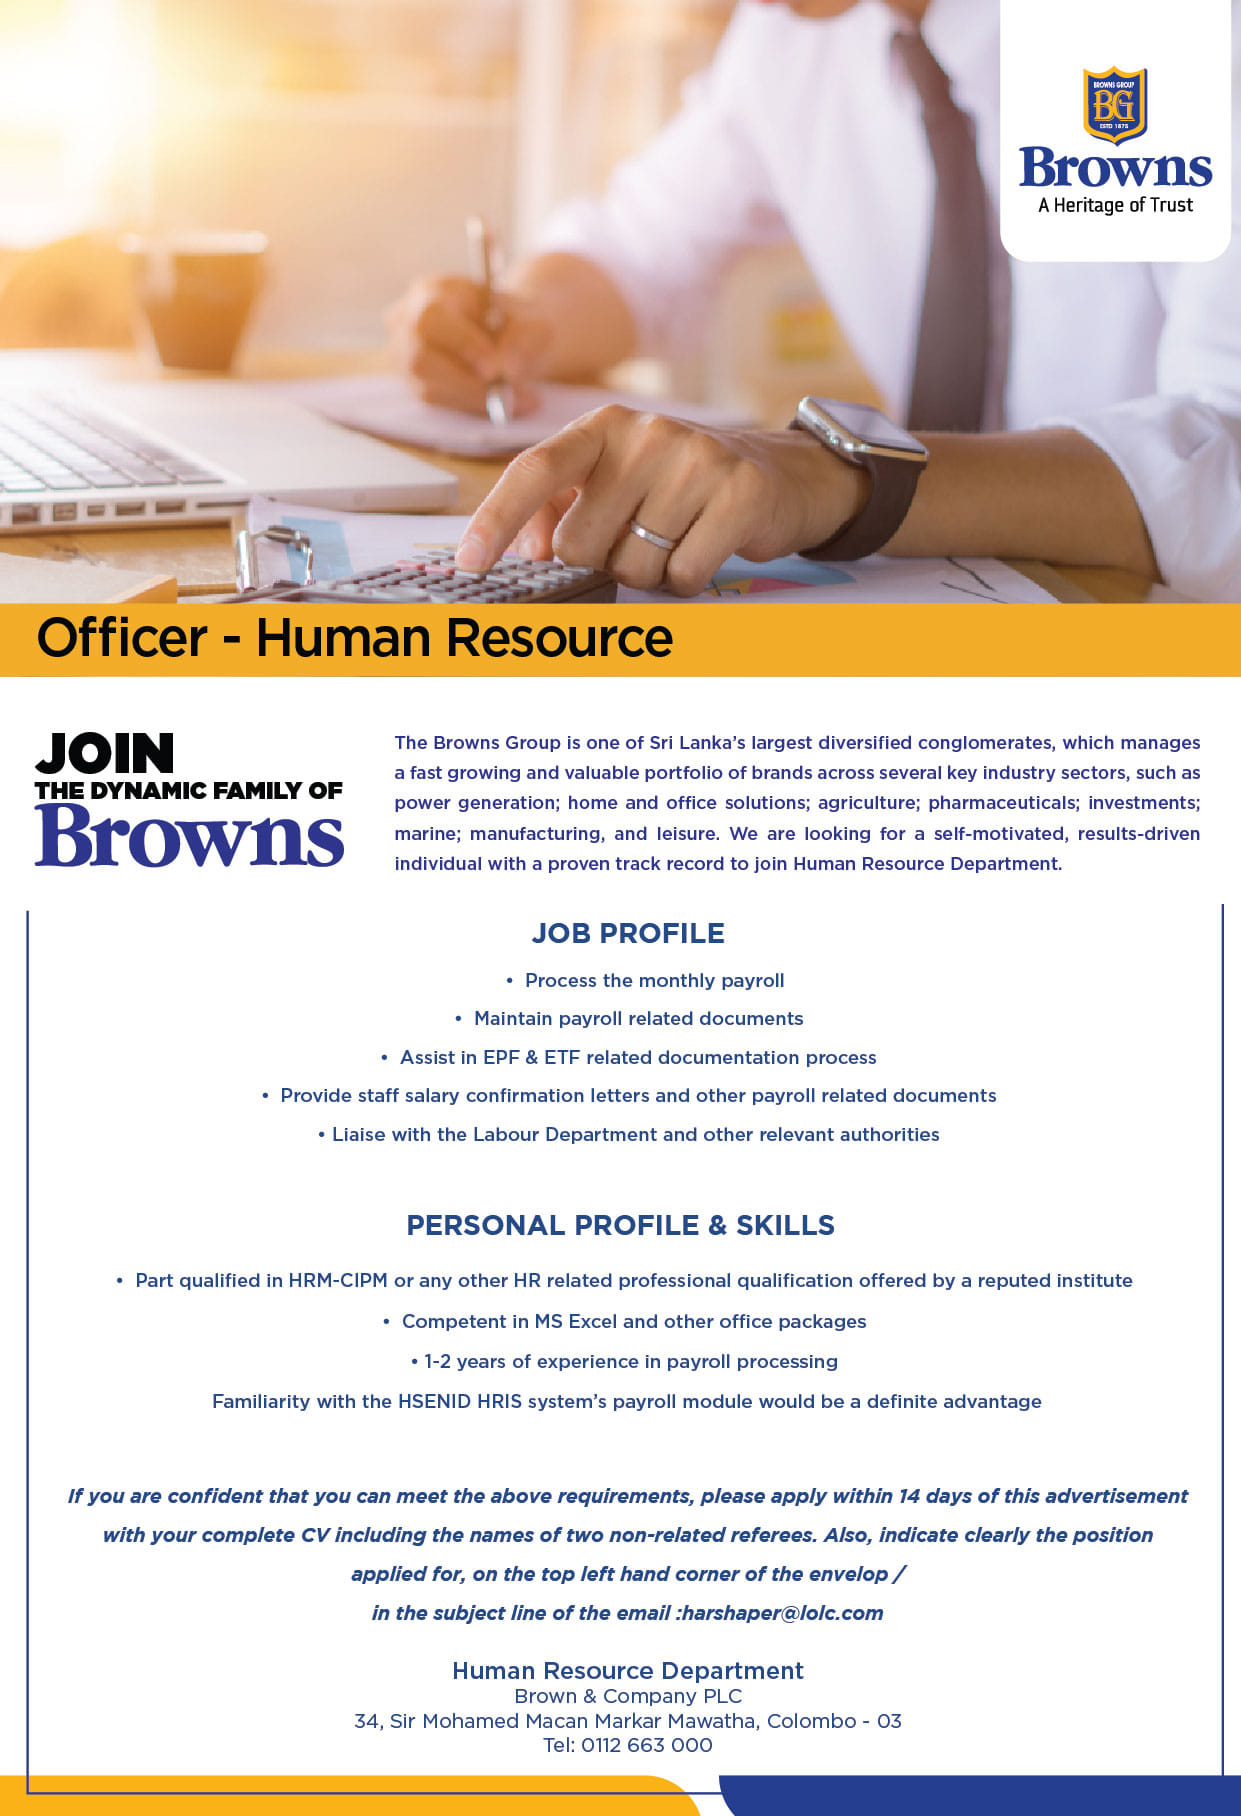 Officer (Human Resources) Jobs Vacancies – Brown and Company PLC Job Vacancy Details